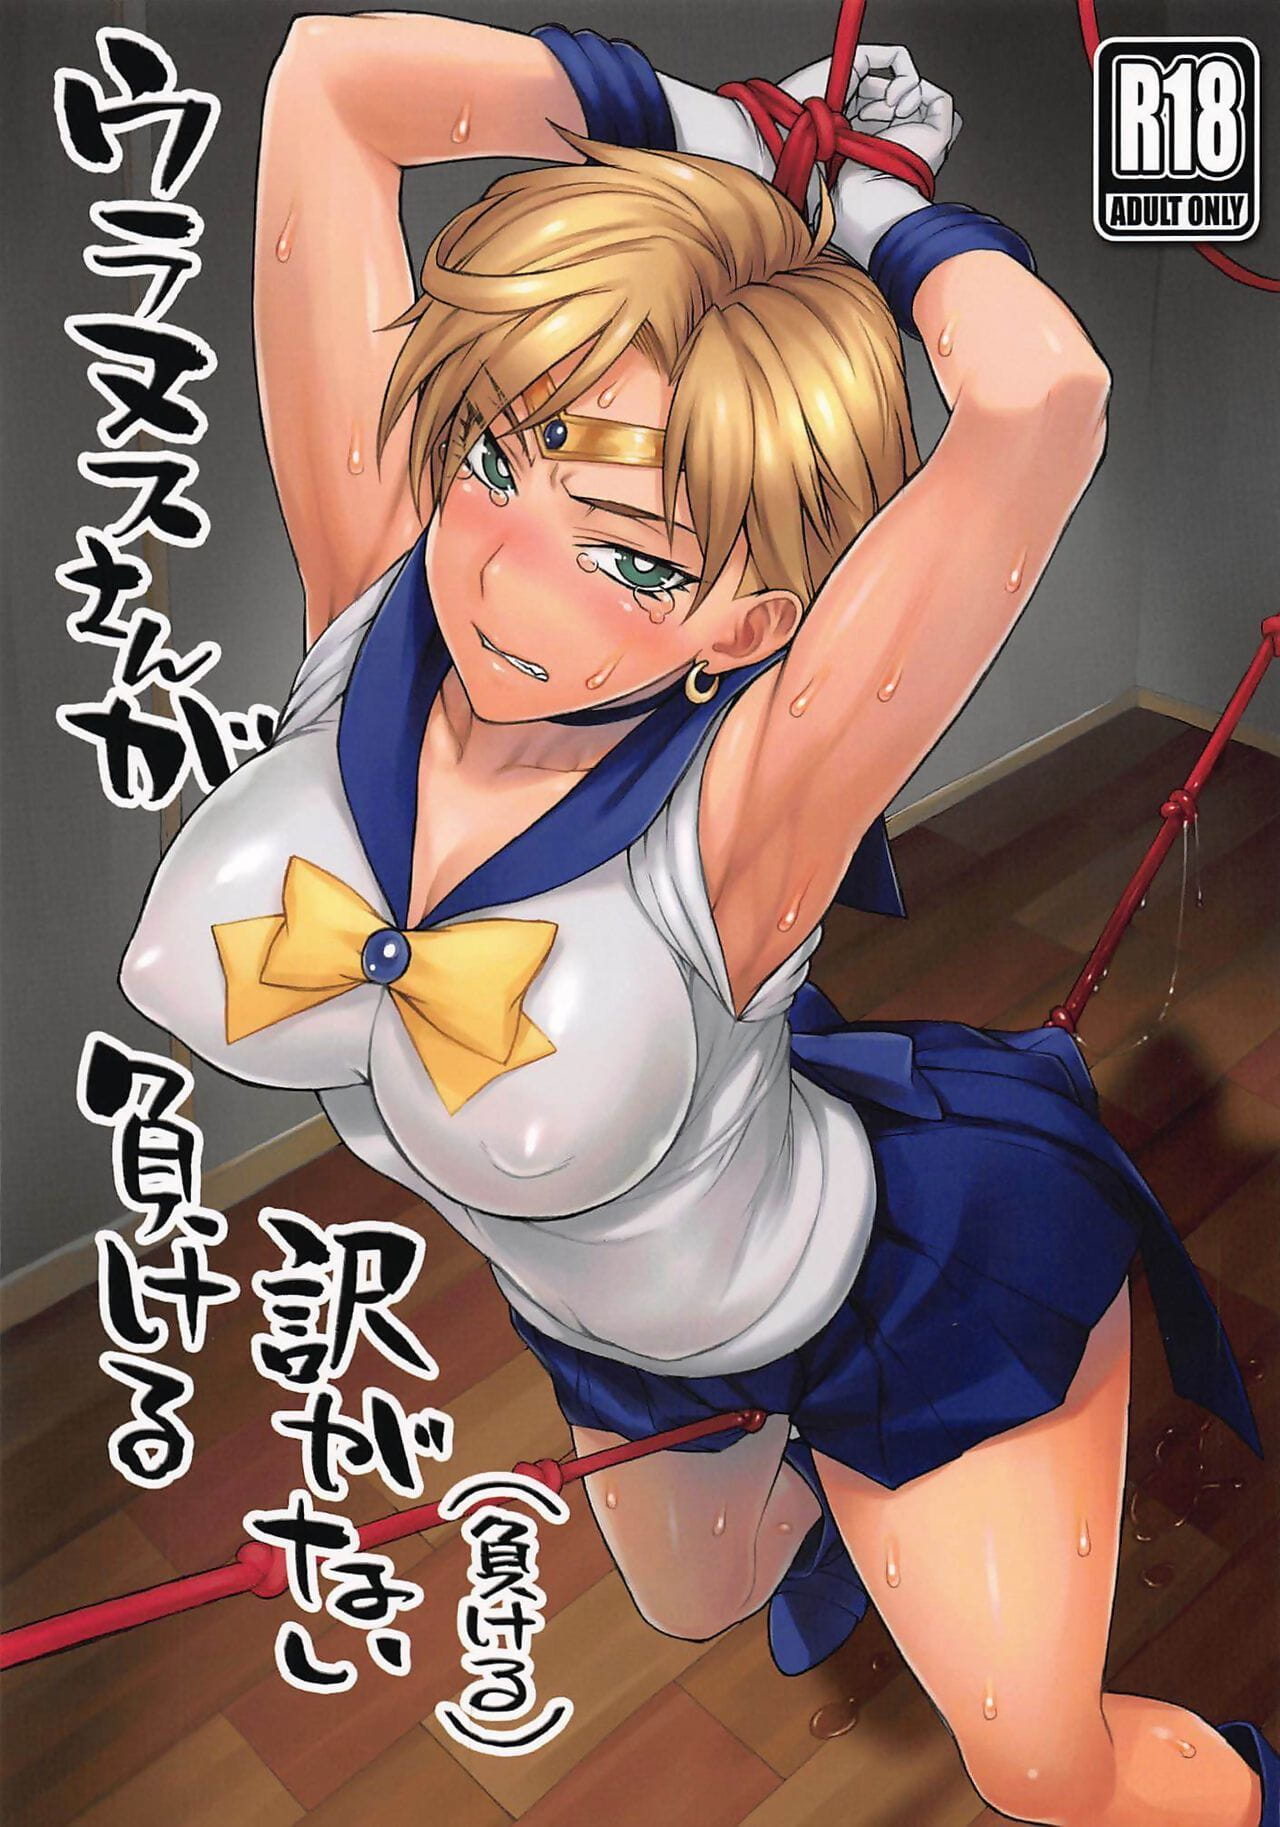 comic1☆16 nagaredamaya 砰 你的 天王星 圣 ga 马克鲁 唤醒 ga 奈 马克鲁 少女 战士 水手 月亮 西班牙语 彩色的